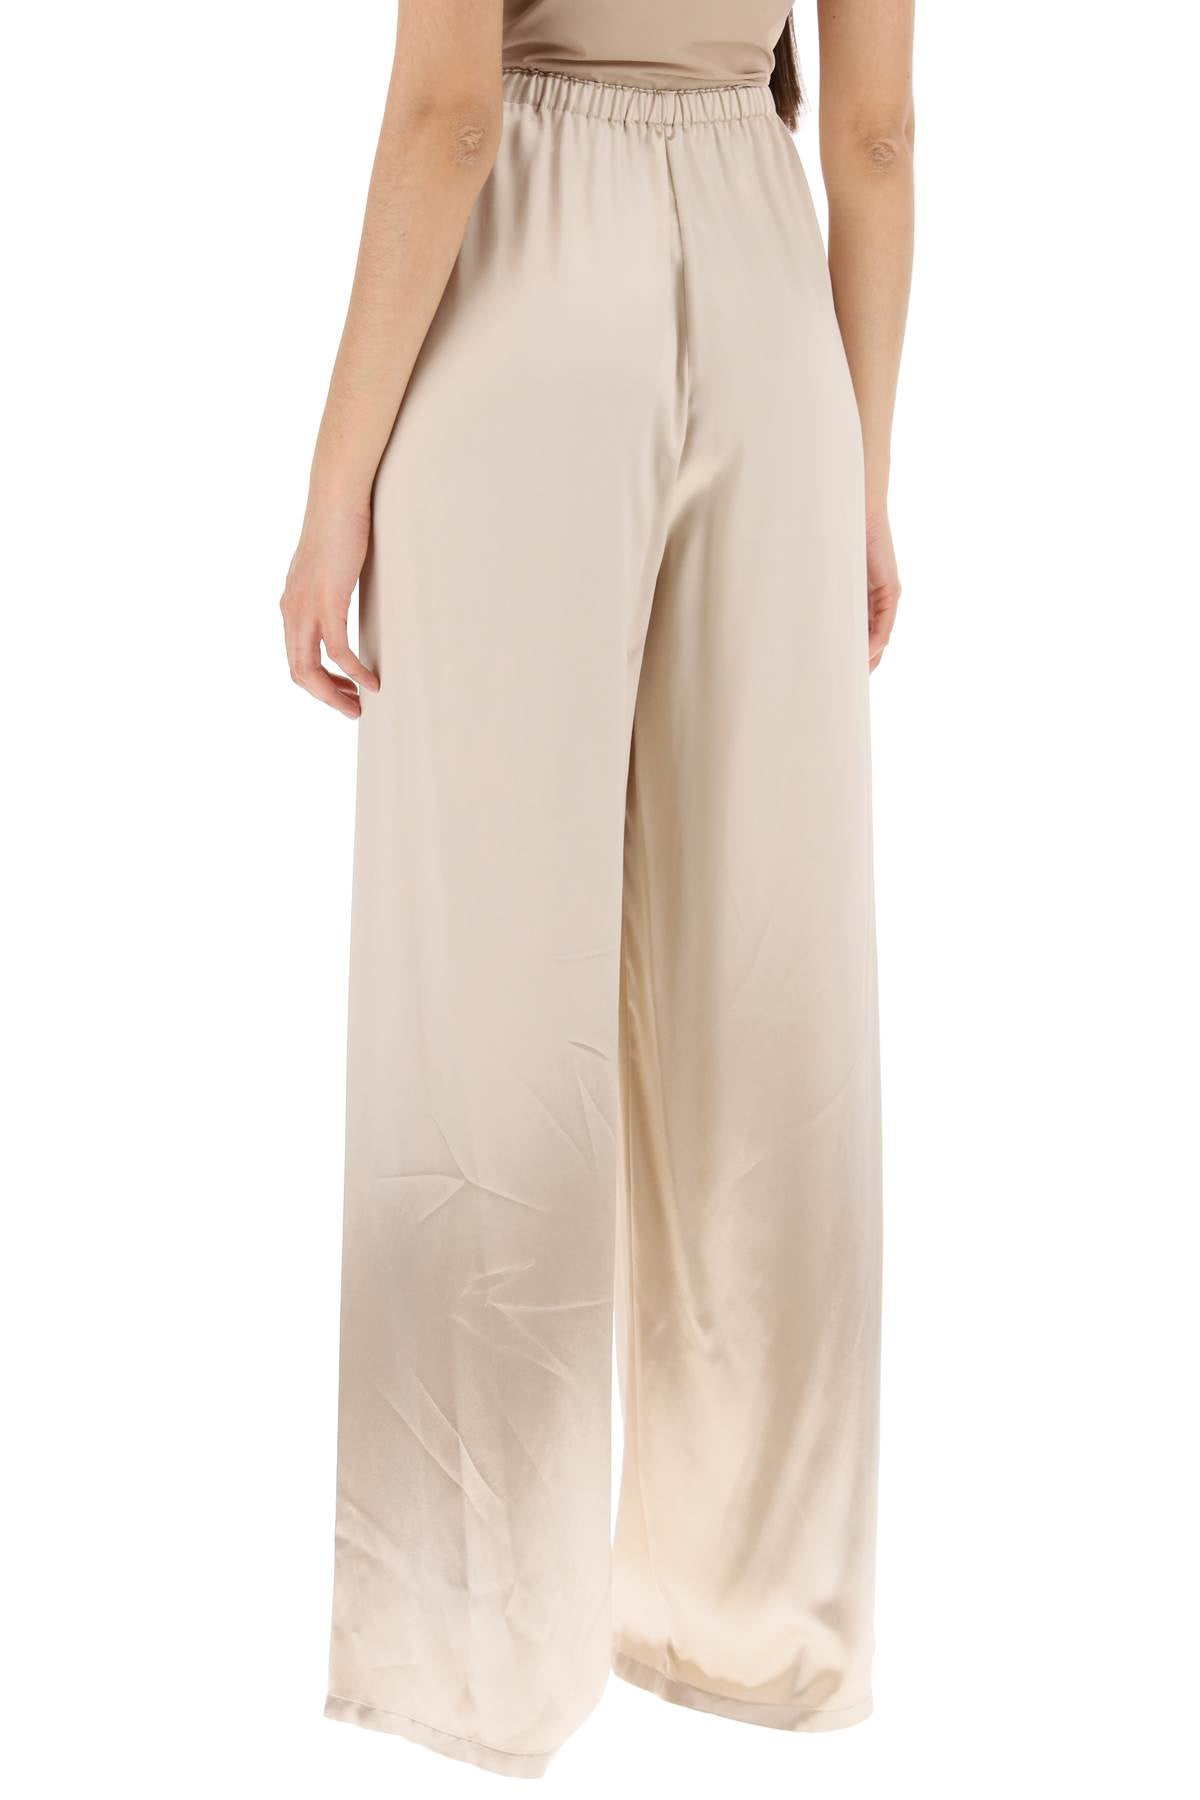 FERRAGAMO Satin Pants for Women - Elastic Waistband - Fluid, Relaxed Silhouette